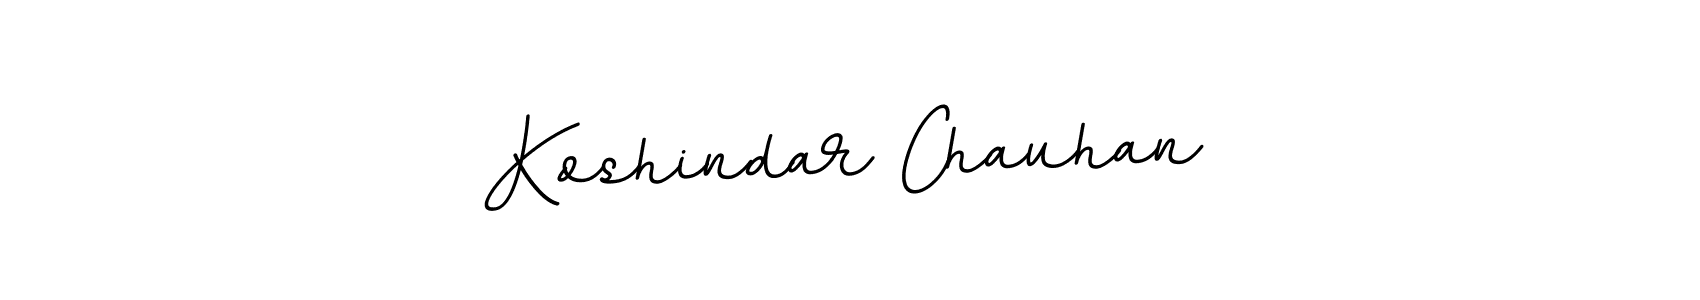 How to Draw Koshindar Chauhan signature style? BallpointsItalic-DORy9 is a latest design signature styles for name Koshindar Chauhan. Koshindar Chauhan signature style 11 images and pictures png